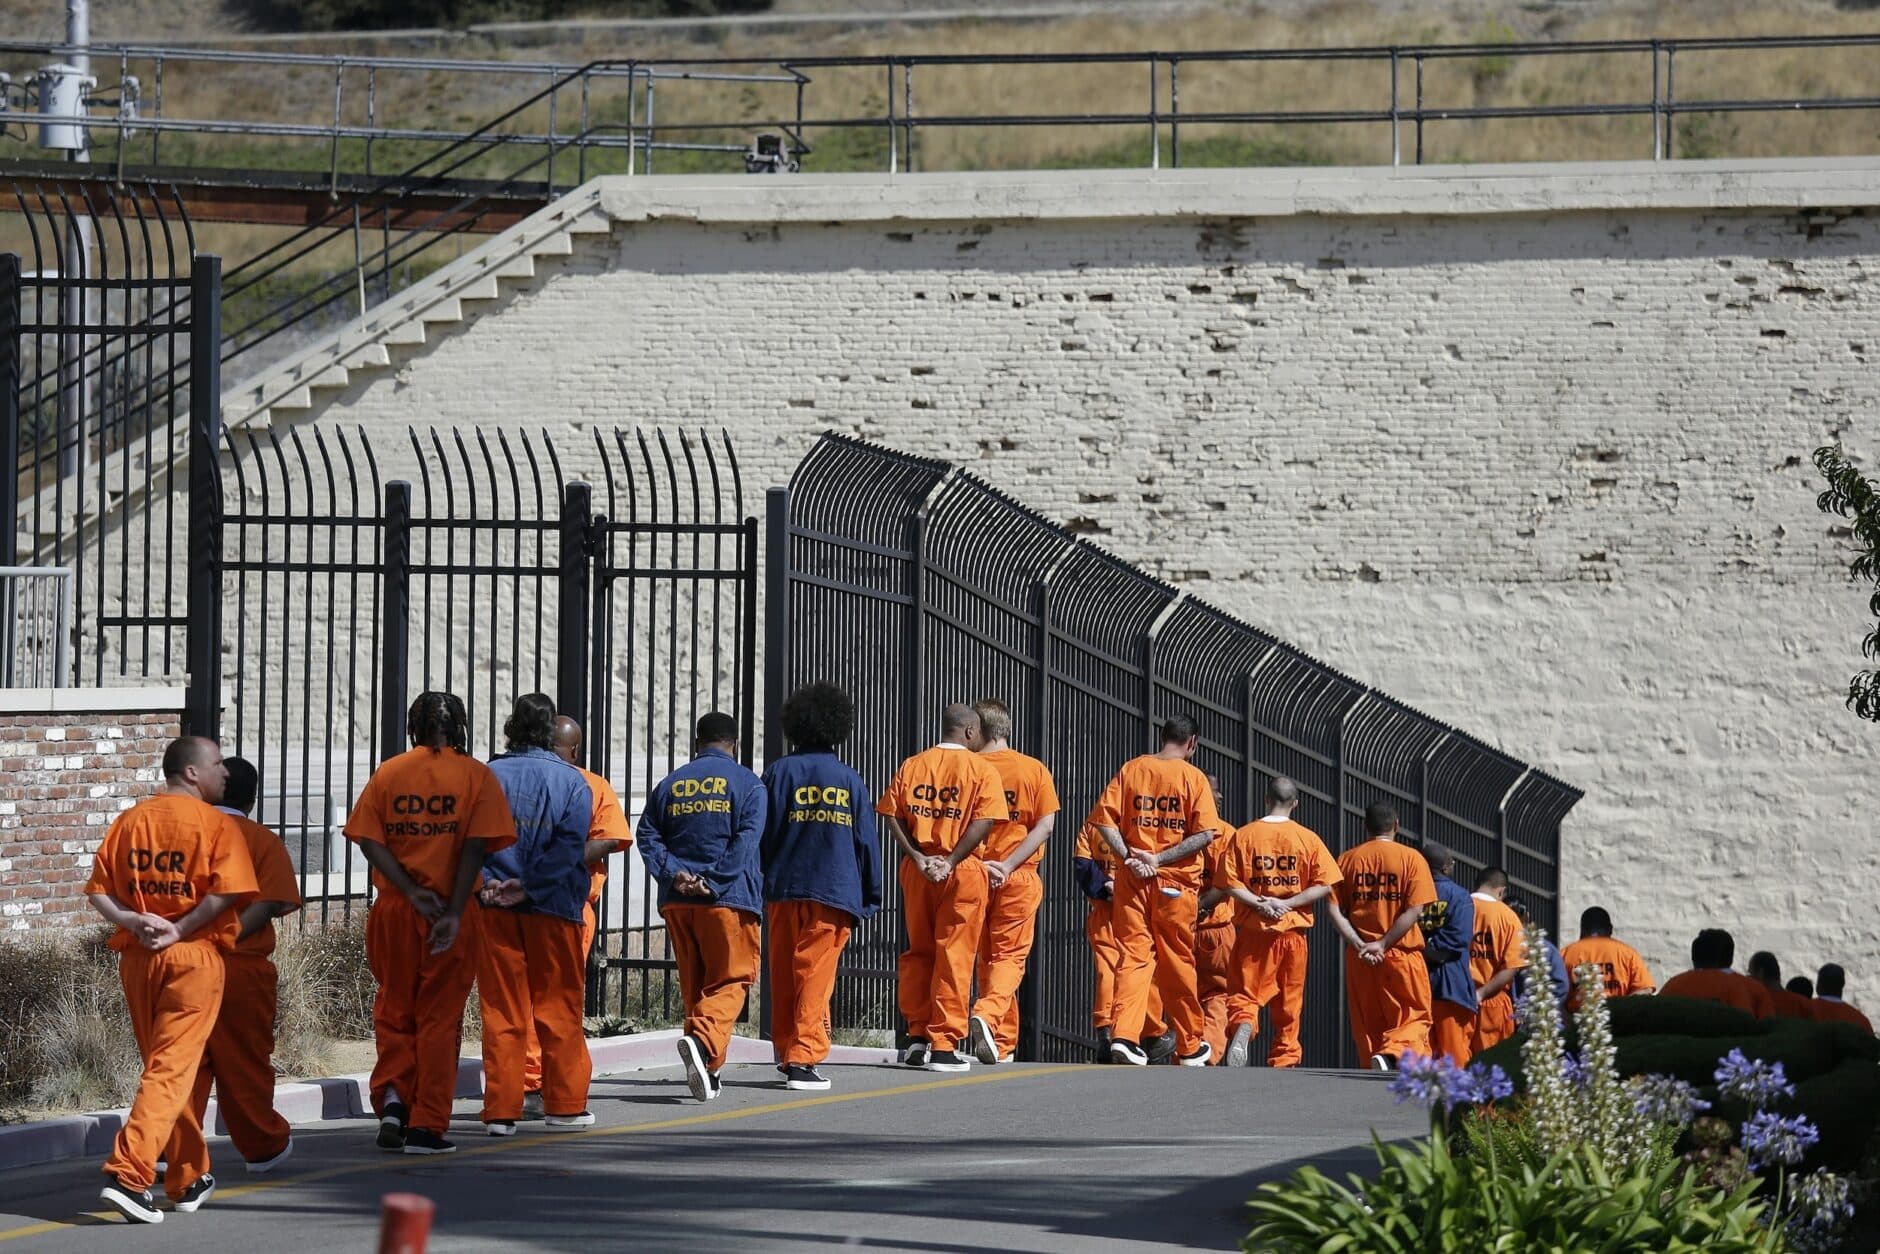 Myrtle beach jail inmates